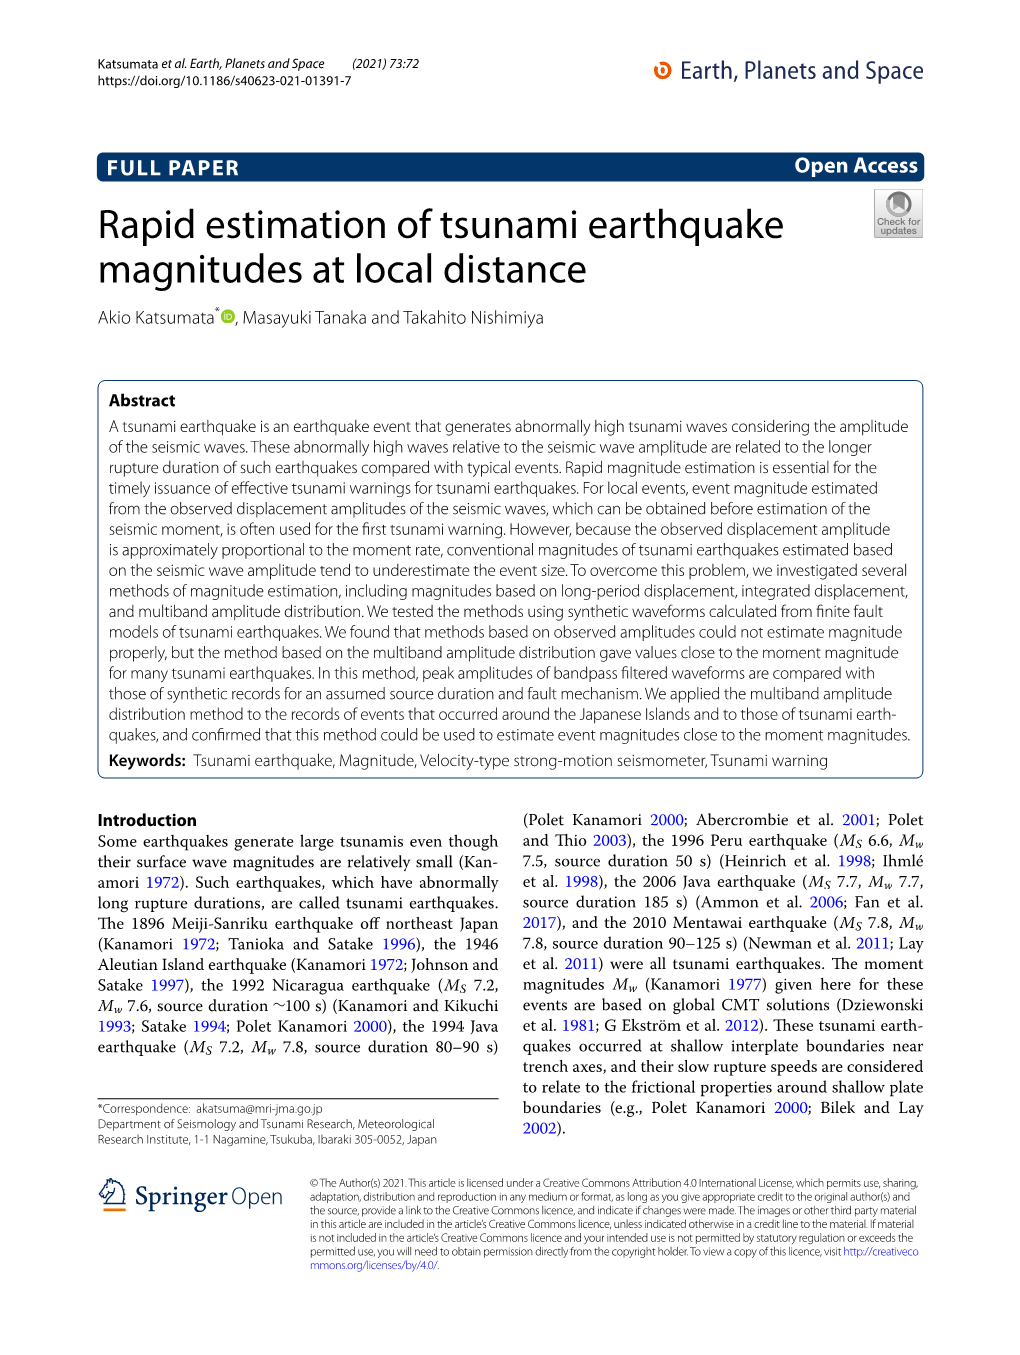 Rapid Estimation of Tsunami Earthquake Magnitudes at Local Distance Akio Katsumata* , Masayuki Tanaka and Takahito Nishimiya